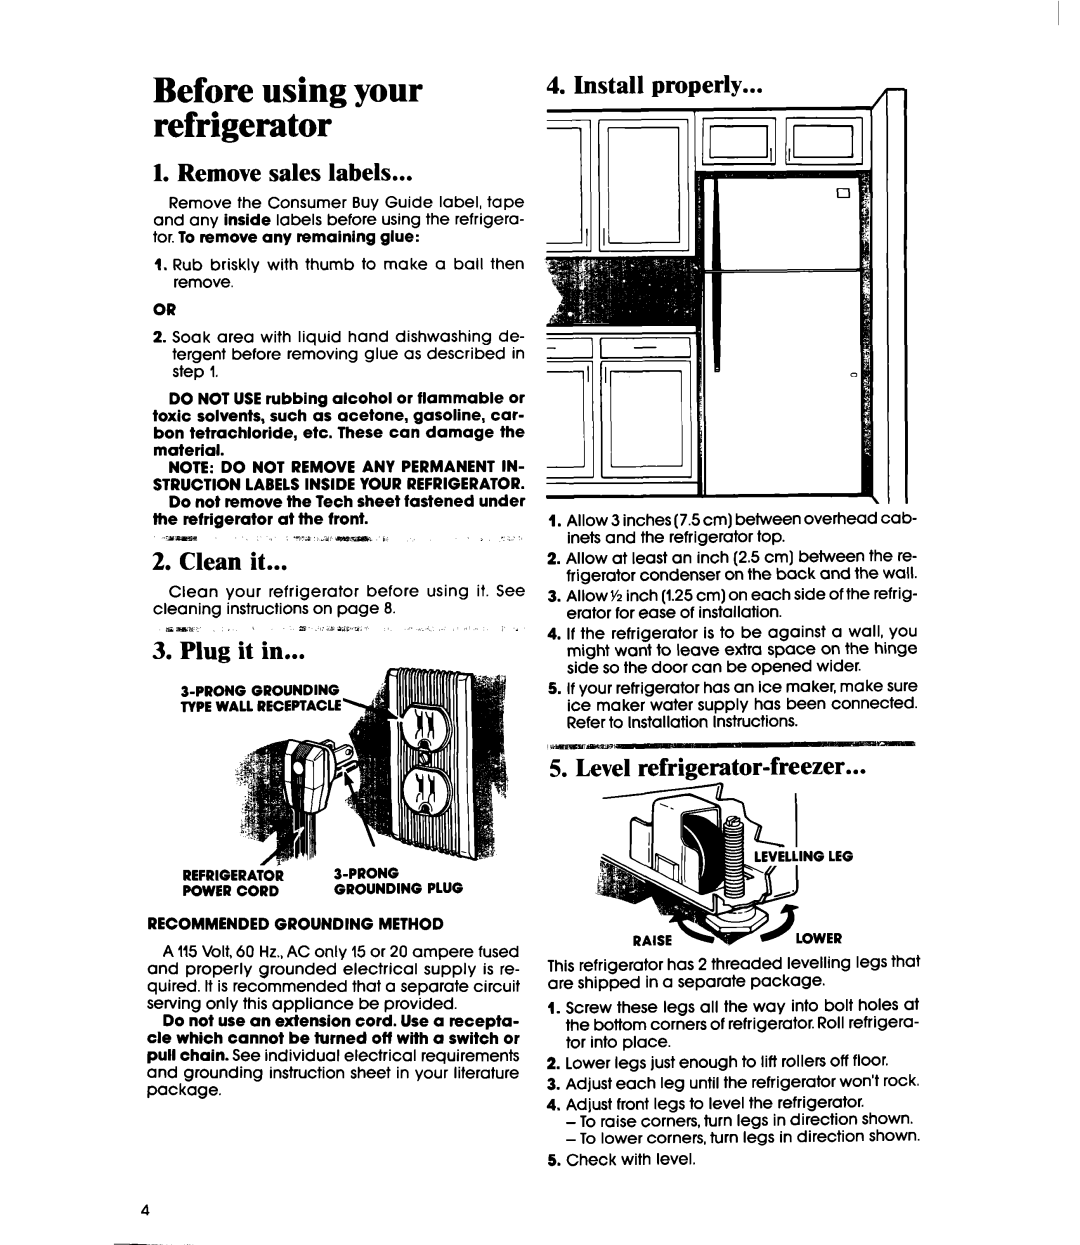 Whirlpool ETWK, ETl6JM manual Before using your refrigerator, Remove sales labels, Clean, Plug it in, Iustall properly 